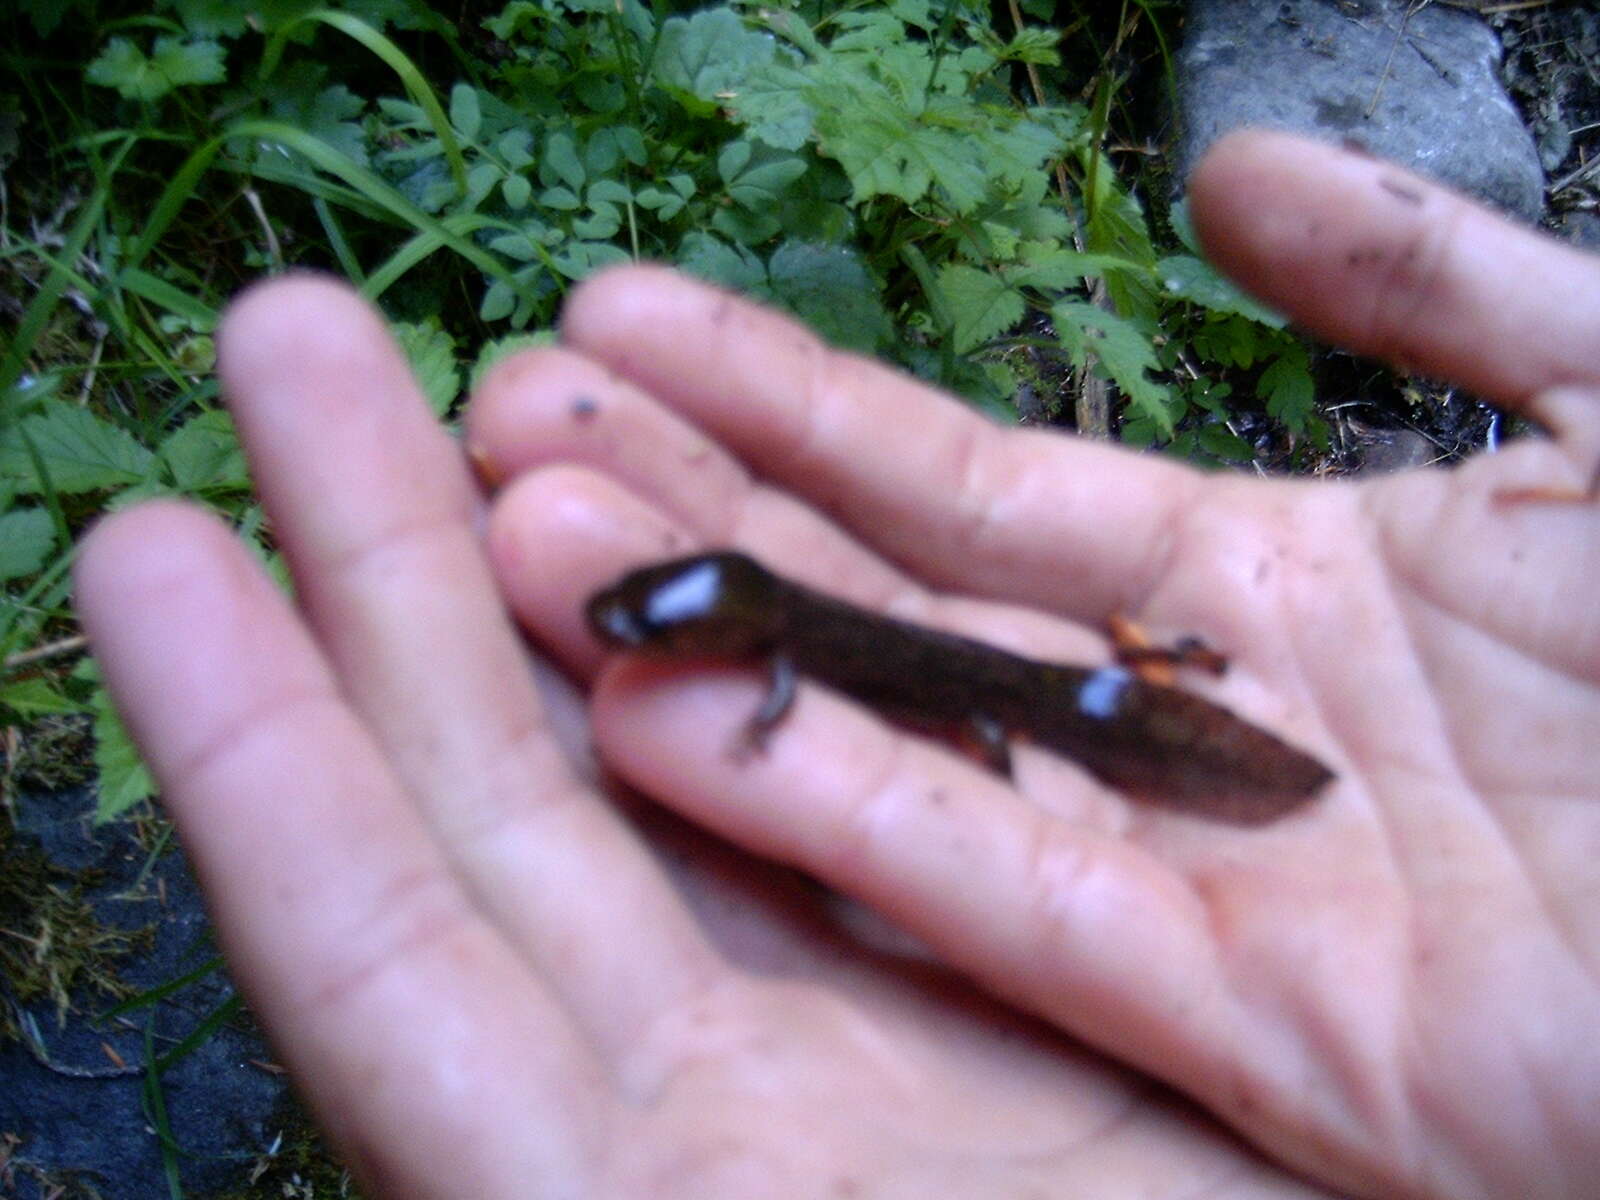 Image of Cope's Giant Salamander